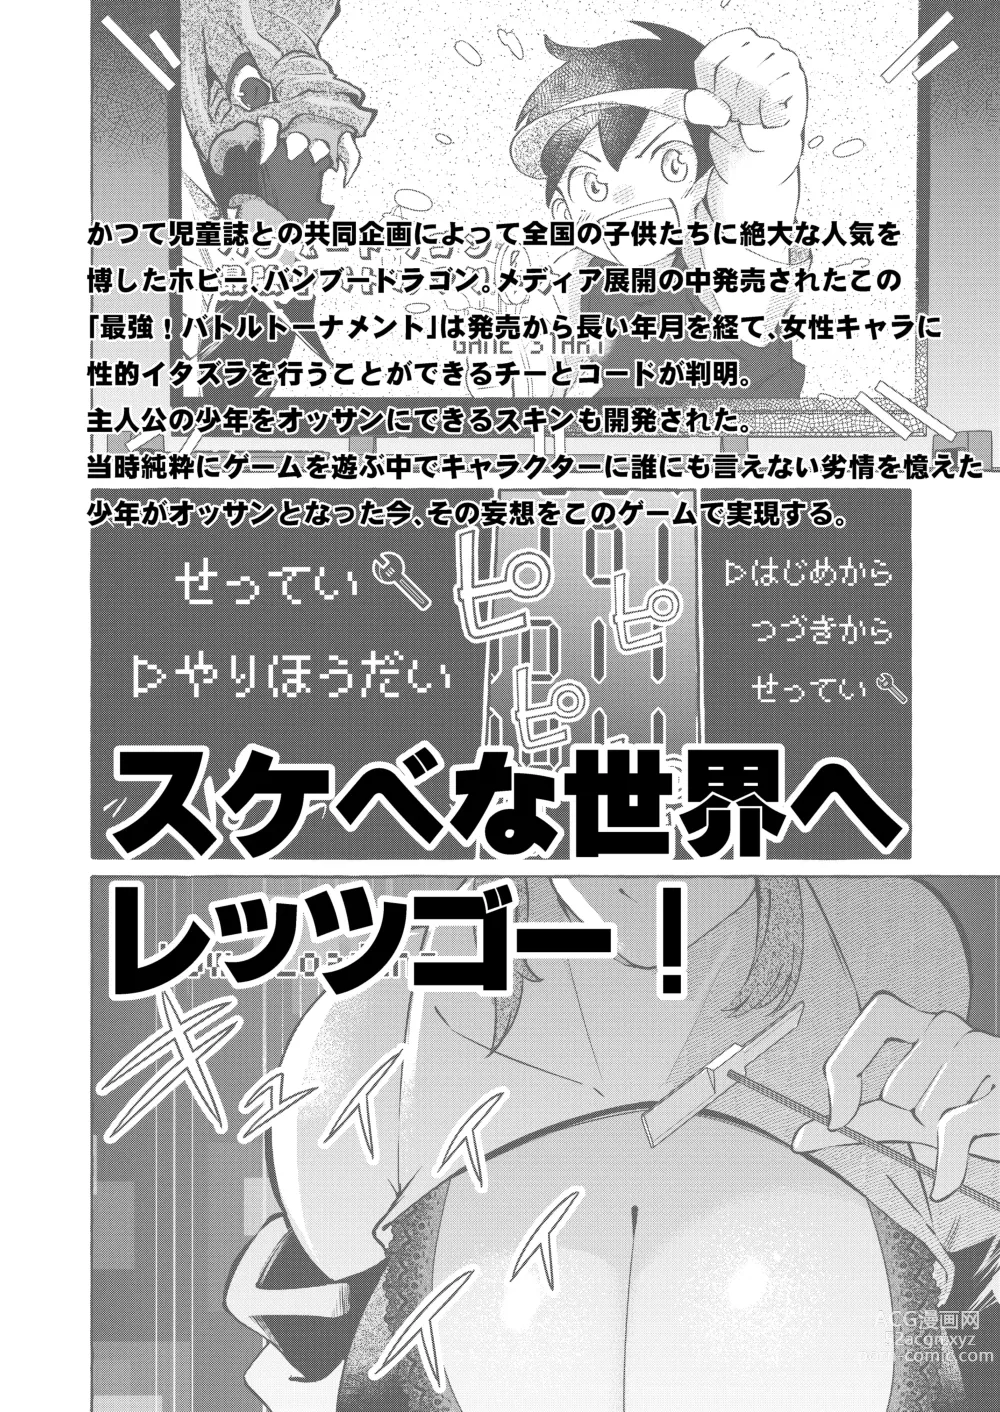 Page 2 of doujinshi Erotic New Game 2〜 Bug seta Game nara NPC demo yaritai Houdai 〜